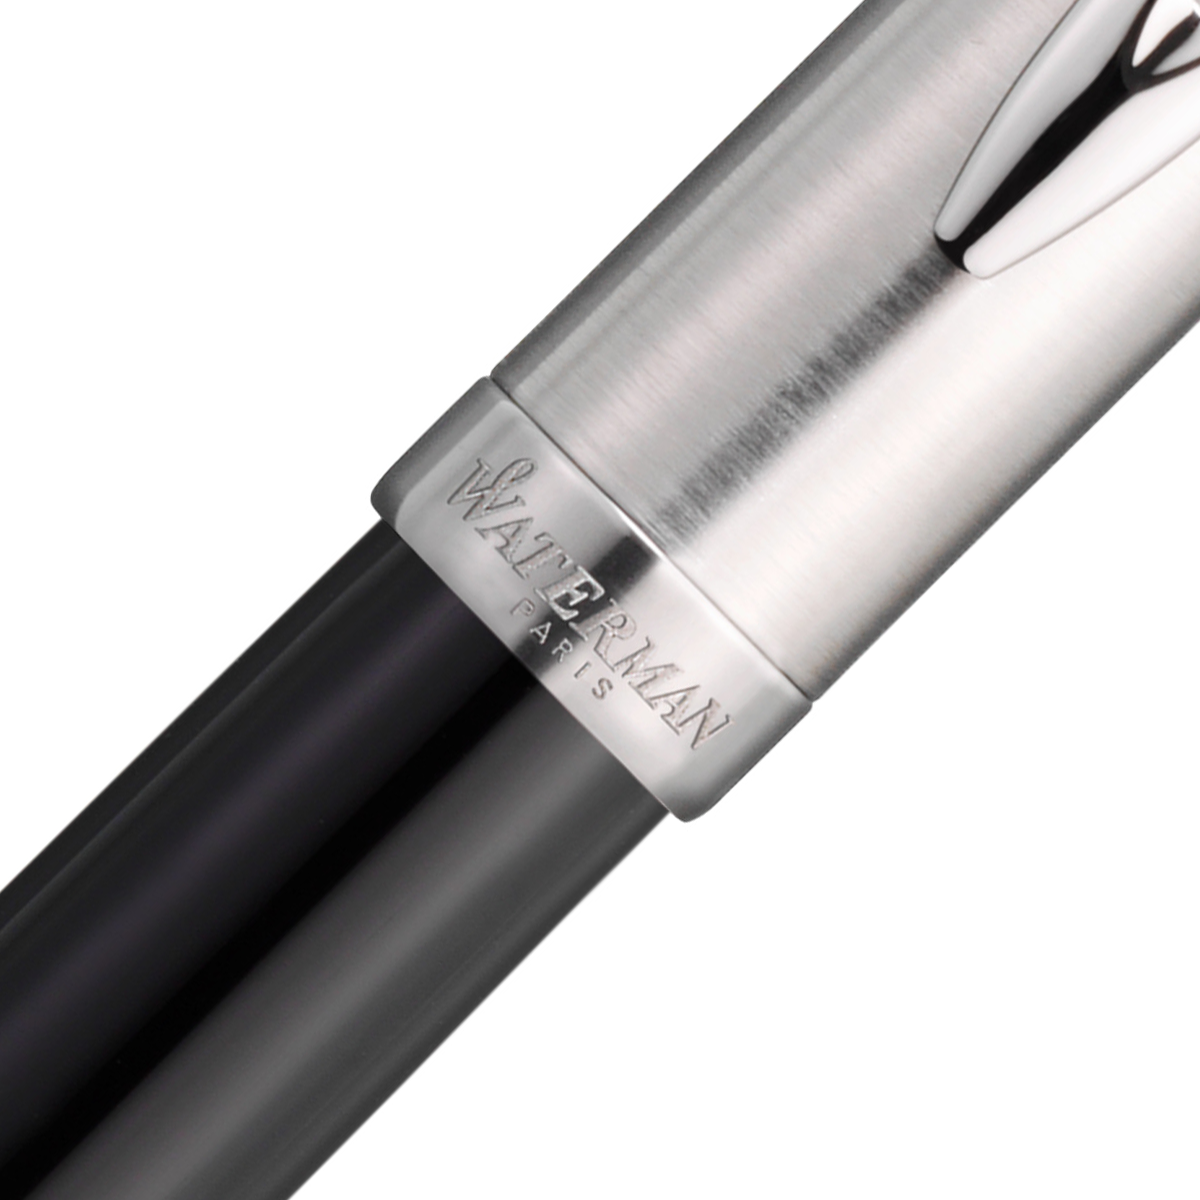 Emblème Black/Chrome Ballpoint Pen in the group Pens / Fine Writing / Ballpoint Pens at Pen Store (128047)